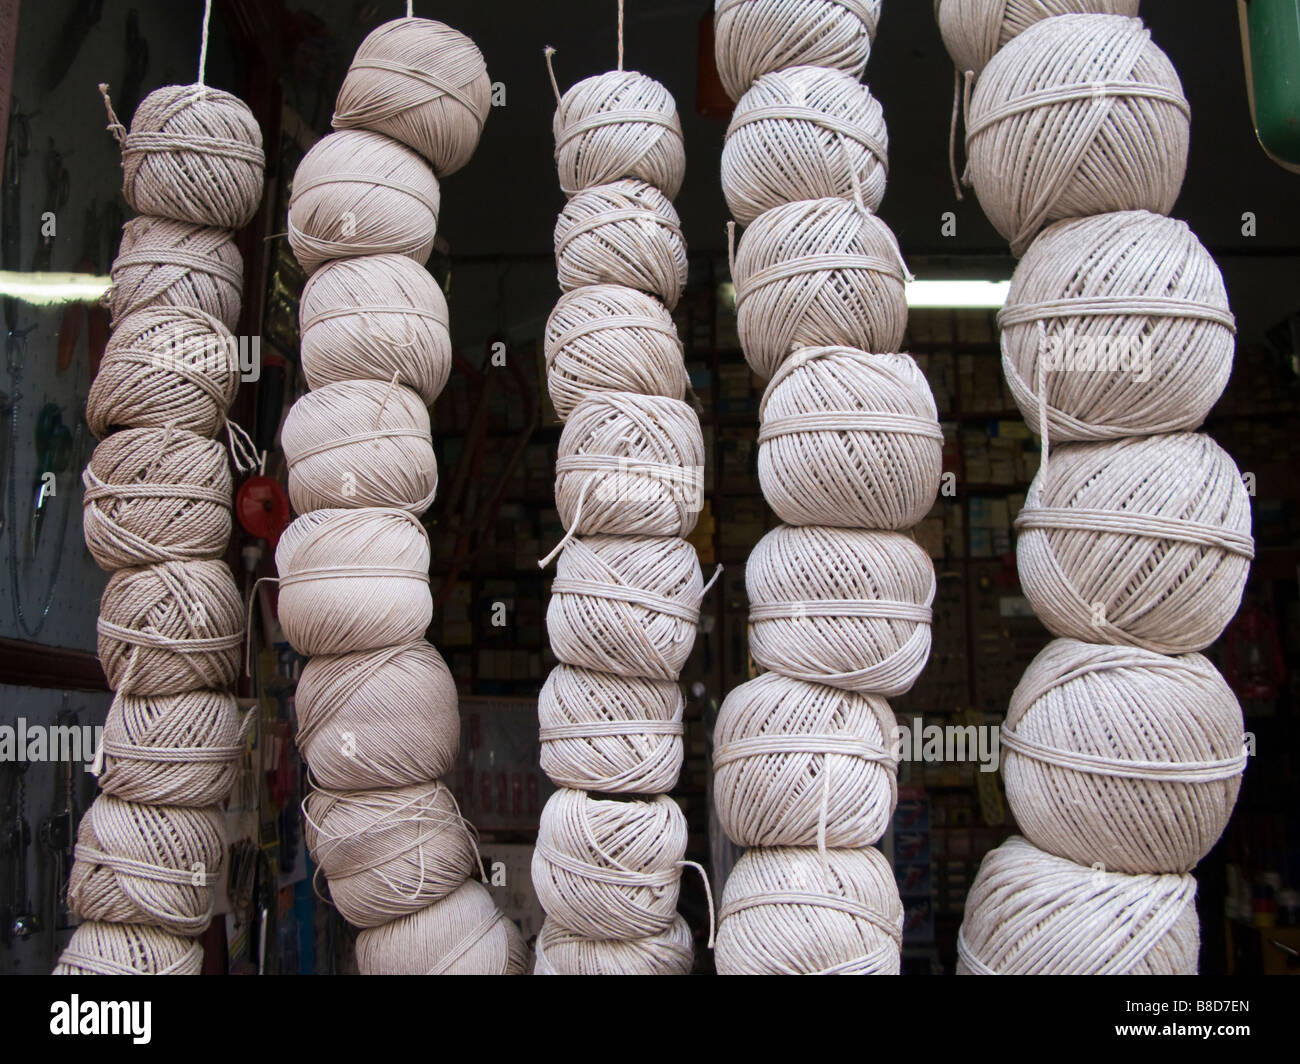 Balls of string, market, Rome, Italy Stock Photo